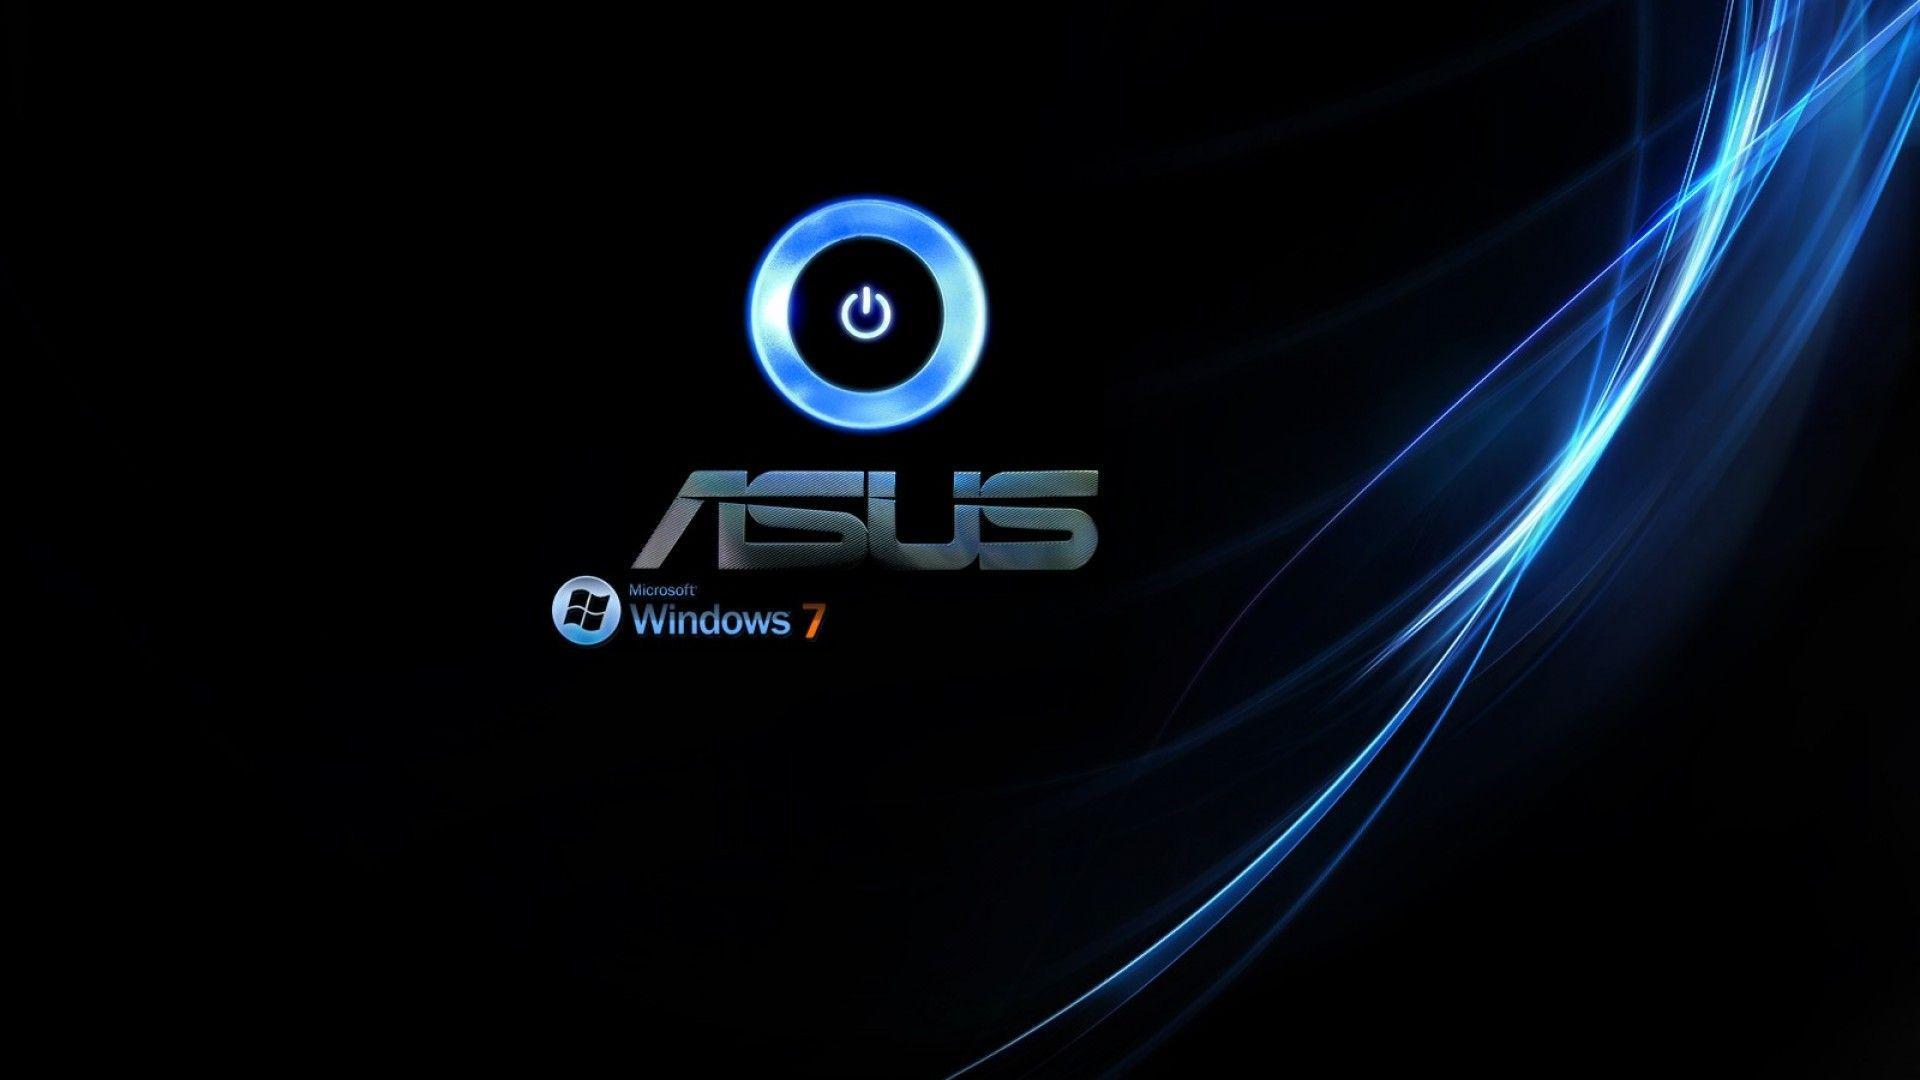 Asus Desktop Background